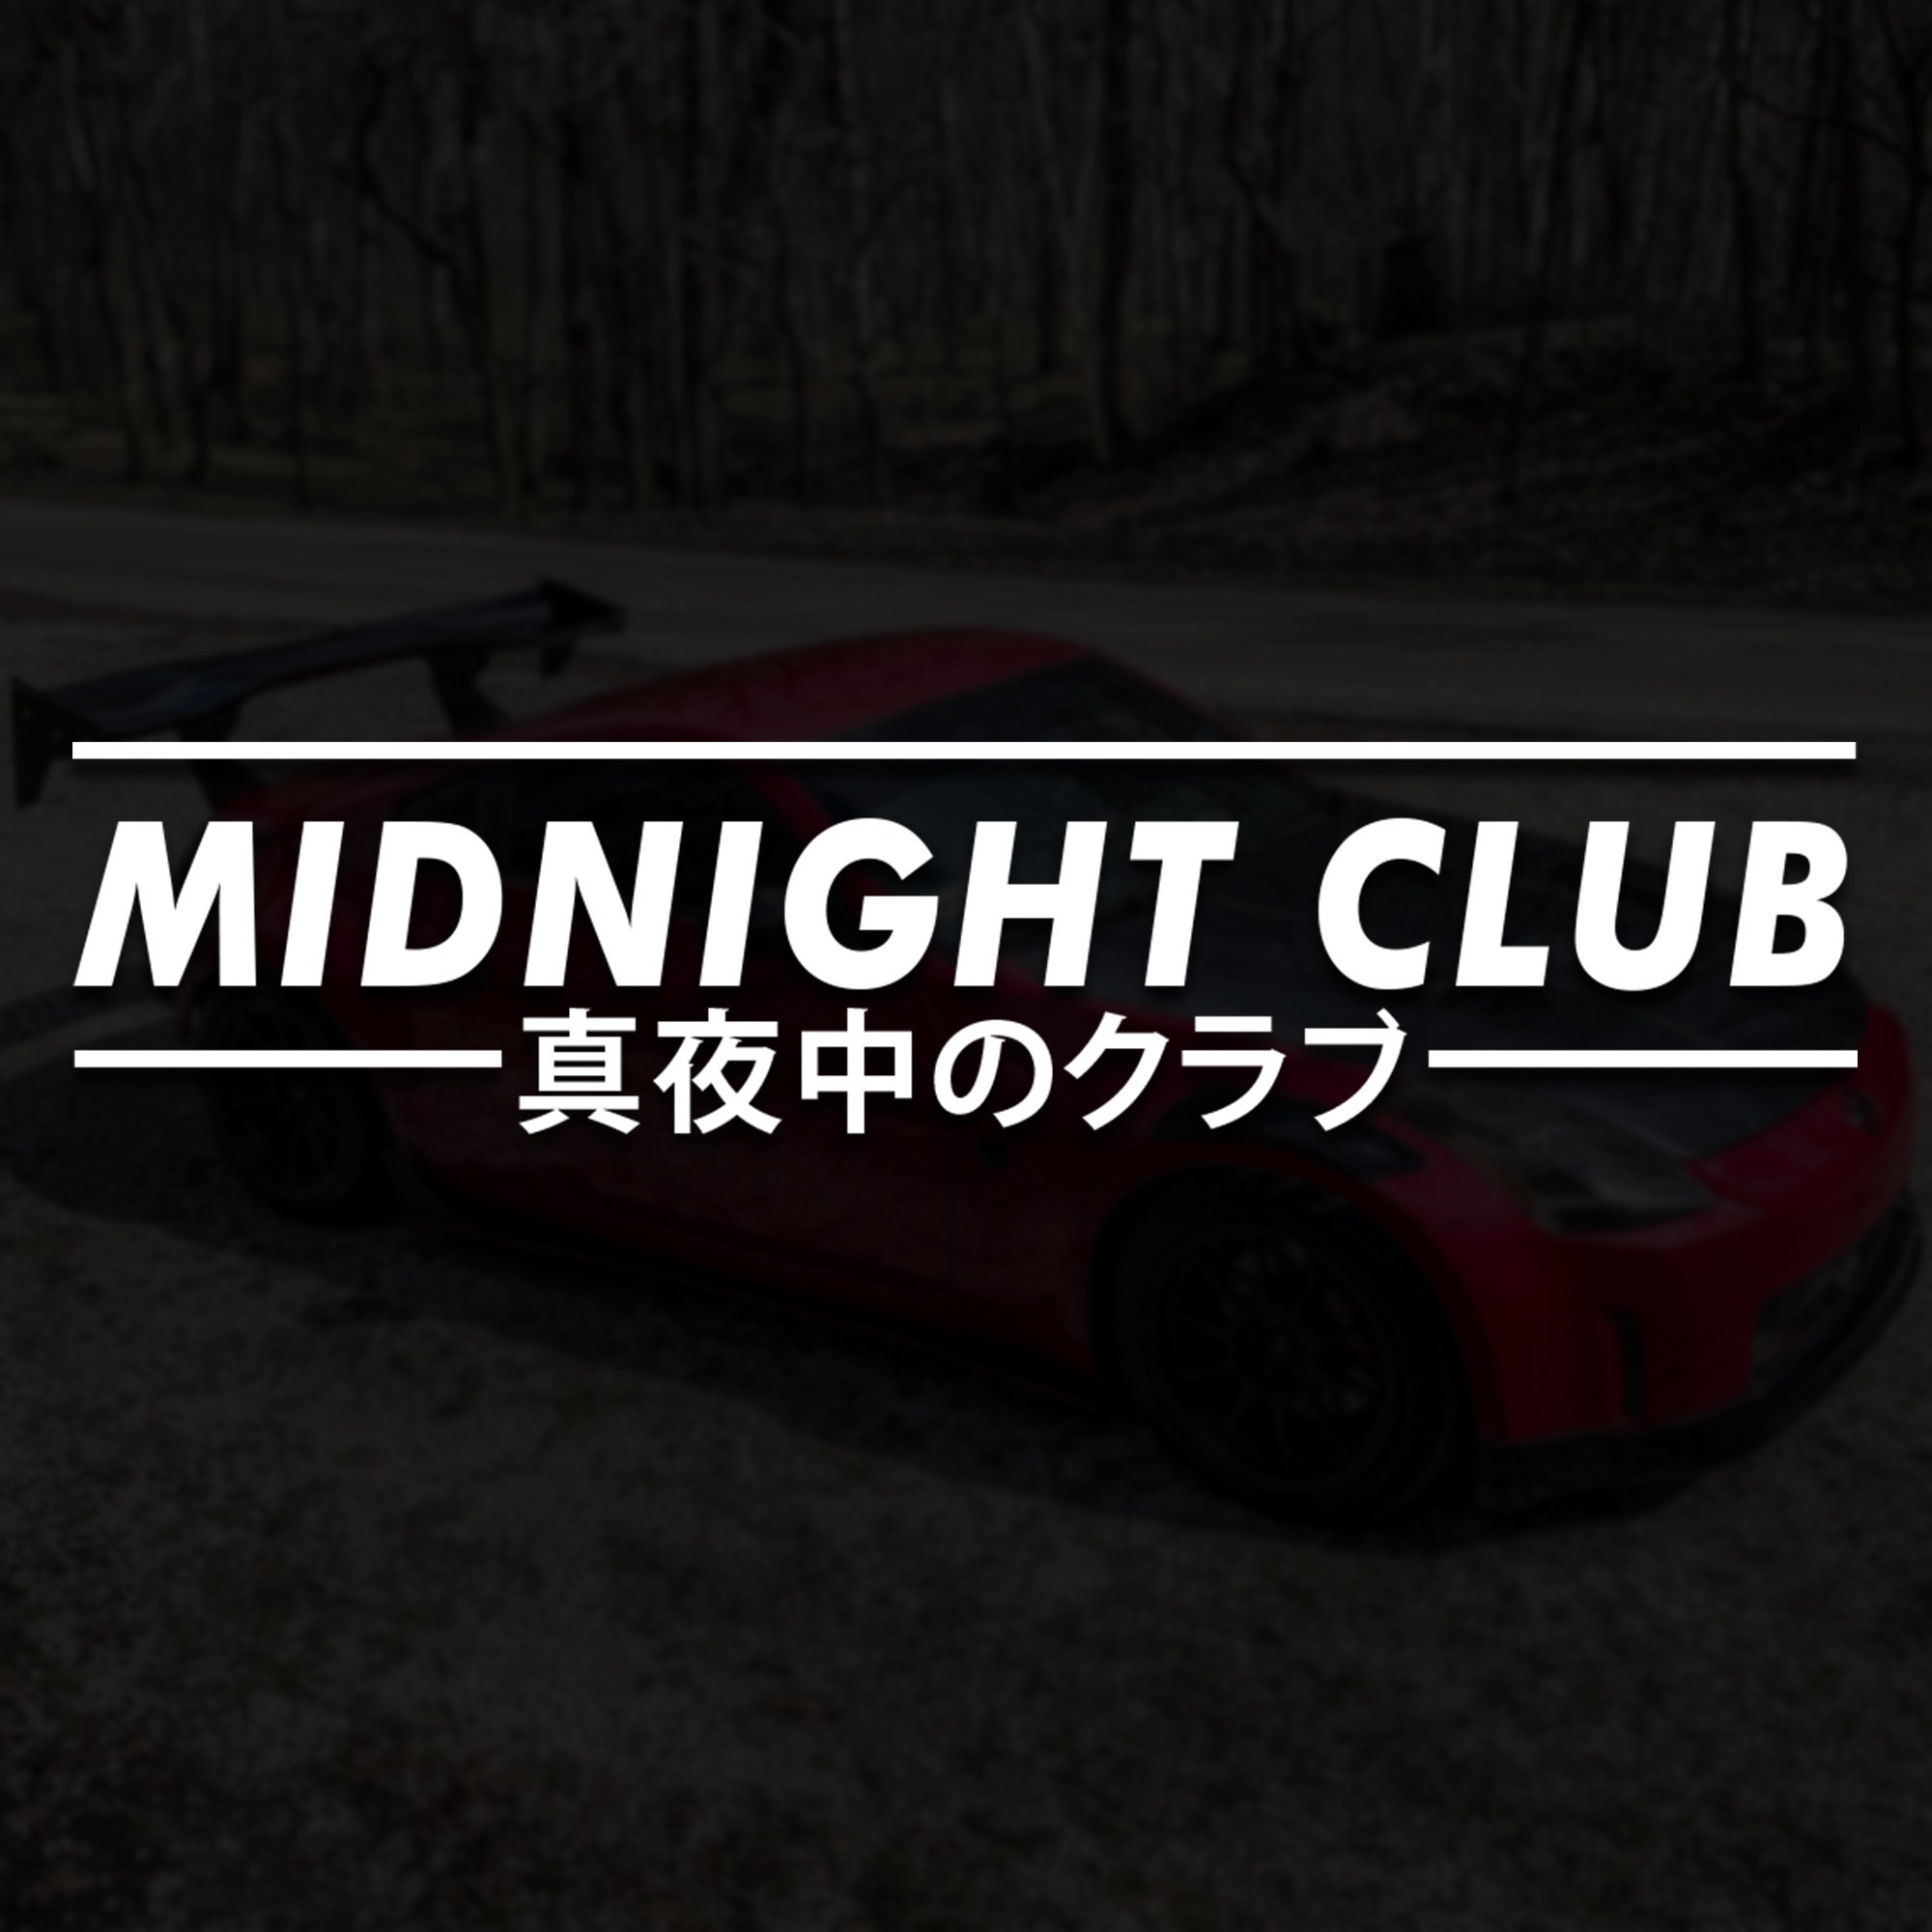 Midnight Club Vinyl Decal JDM Japanese Text Banner Exhaust - Etsy Ireland